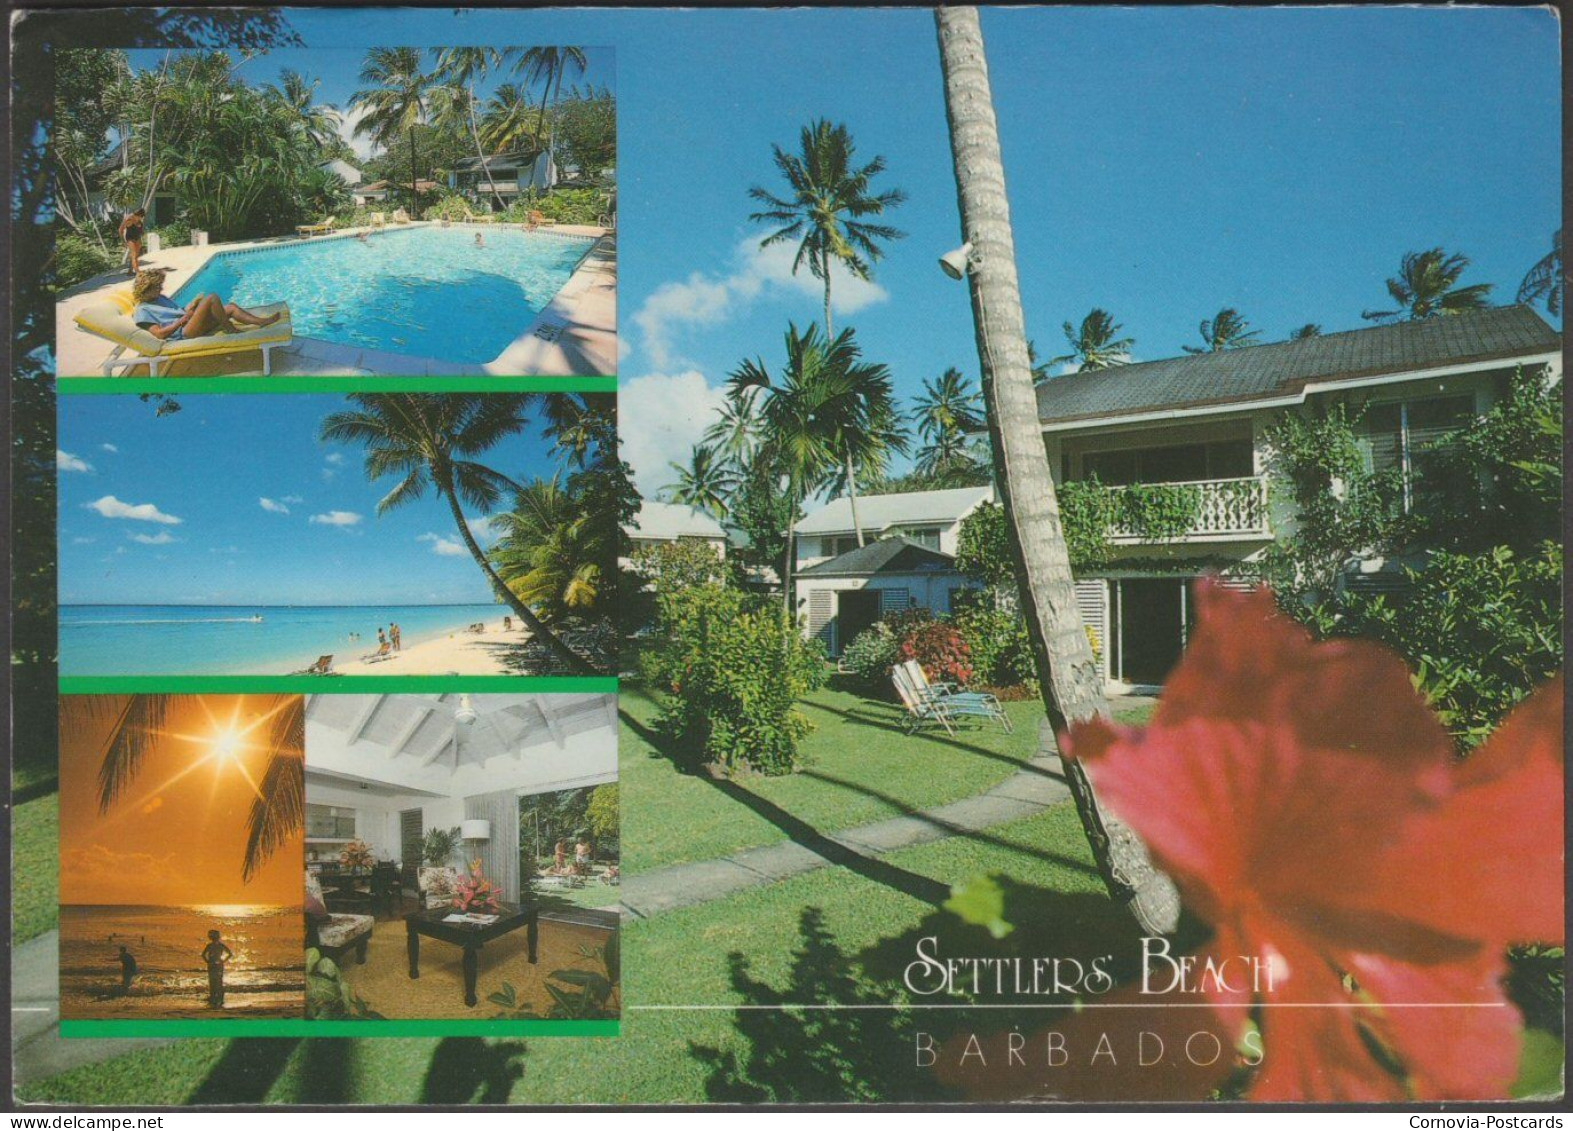 Settlers' Beach, Barbados, 1991 - Multi-Media Productions Postcard - Barbados (Barbuda)